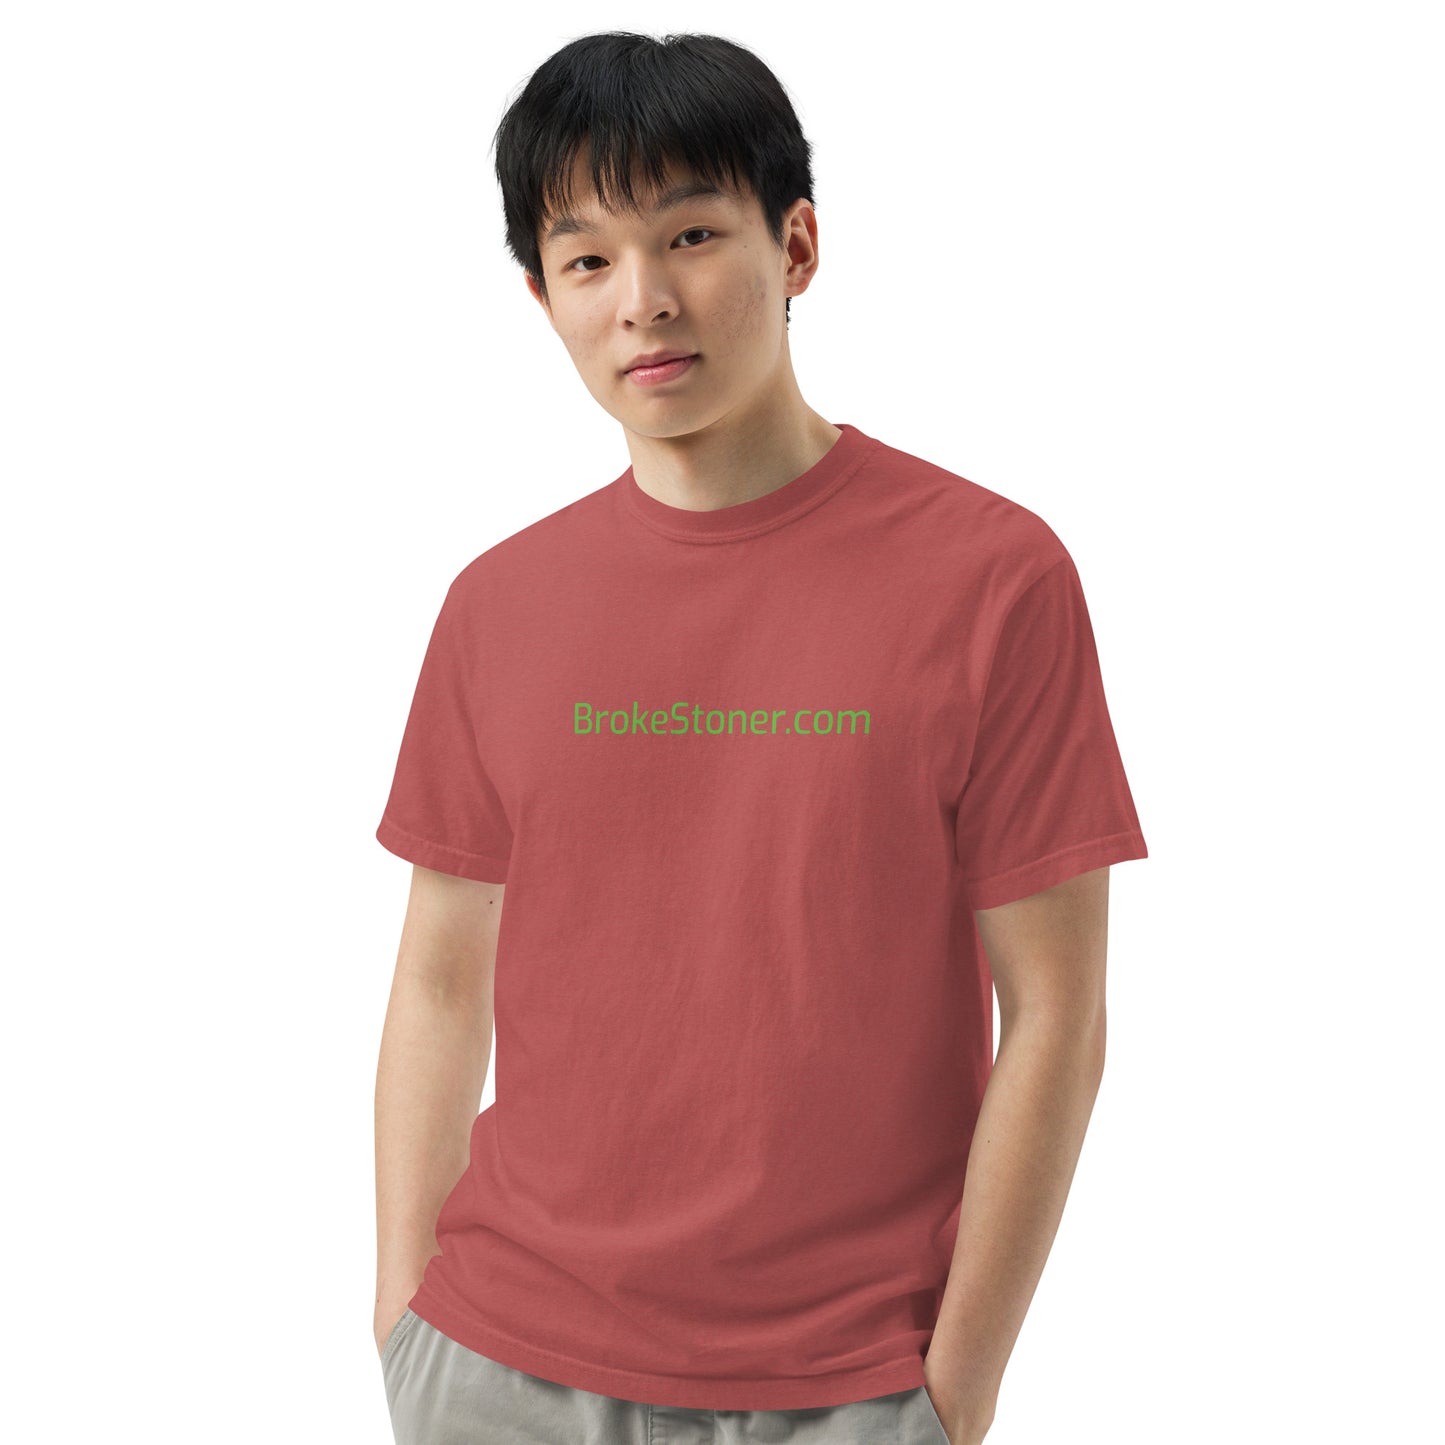 BrokeStoner.com The T-Shirt